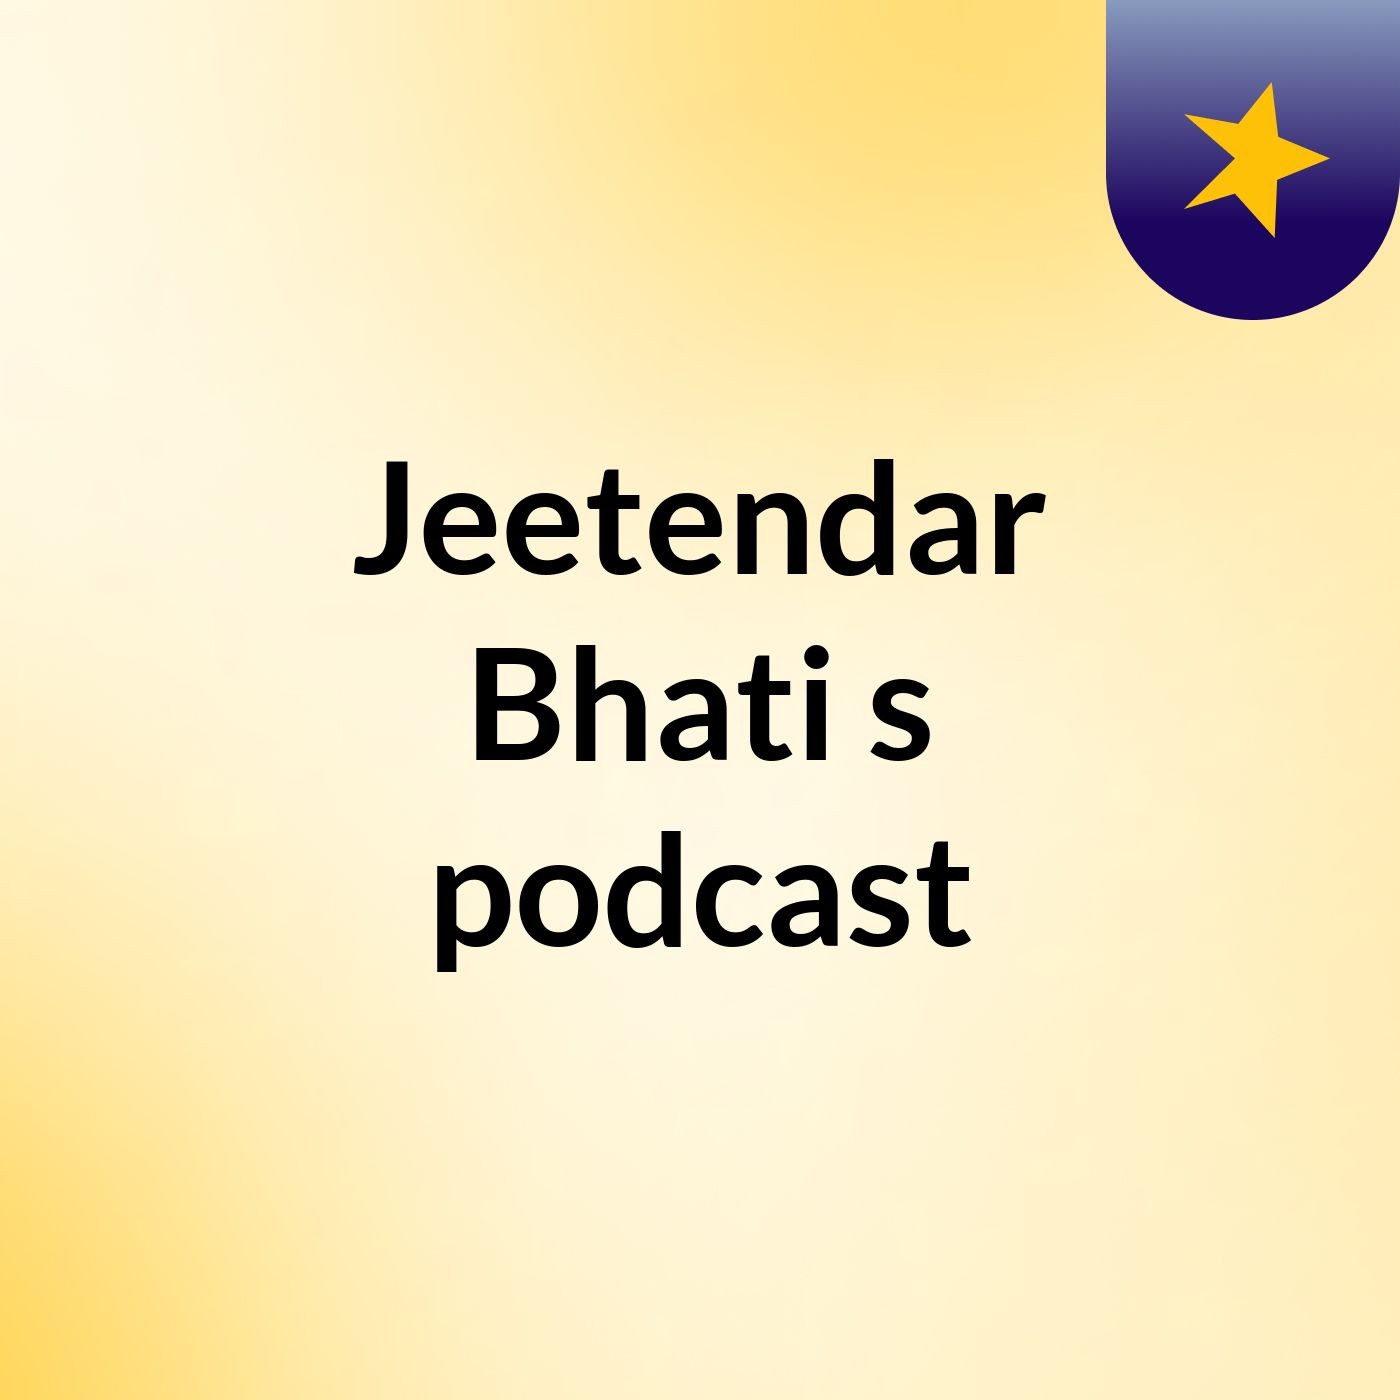 Jeetendar Bhati's podcast